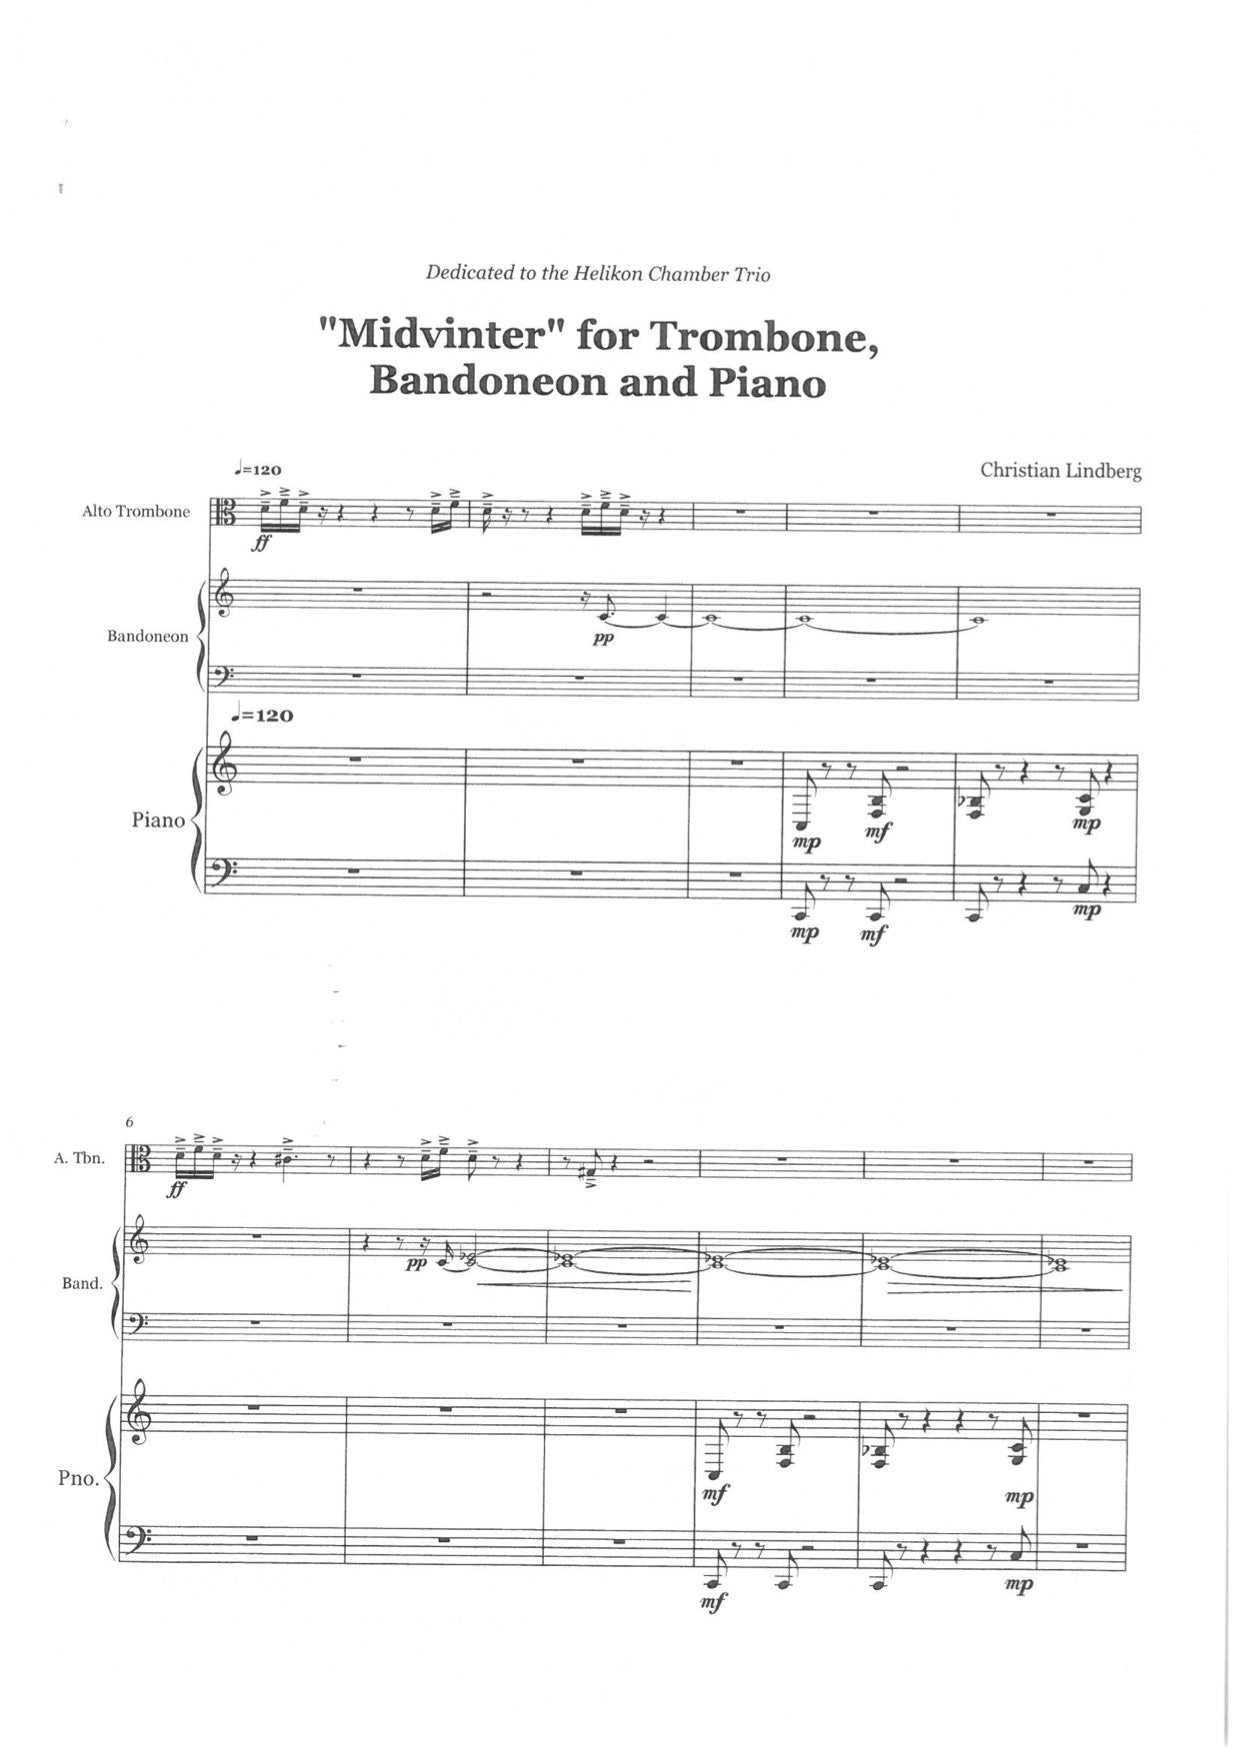 Christian Lindberg - Midvinter, Alto Trombone,Bandoneon,Piano